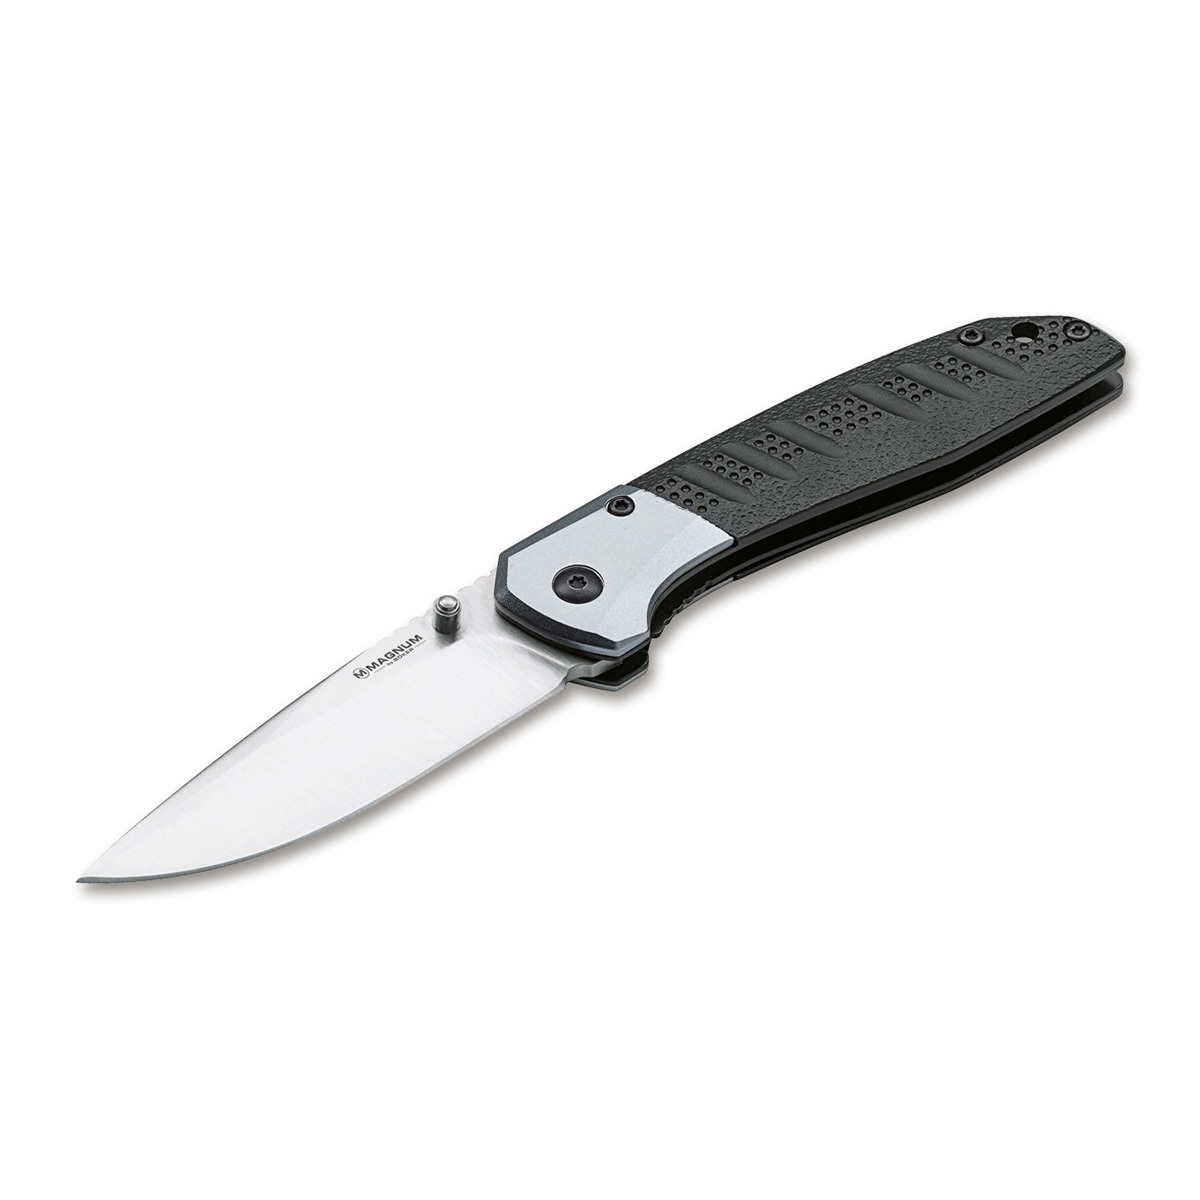 Нож складной Boker Advance pro edc, сталь 440C, рукоять алюминий нож с фиксированным клинком gerber lmf ii сталь 420hc рукоять термопластик grn